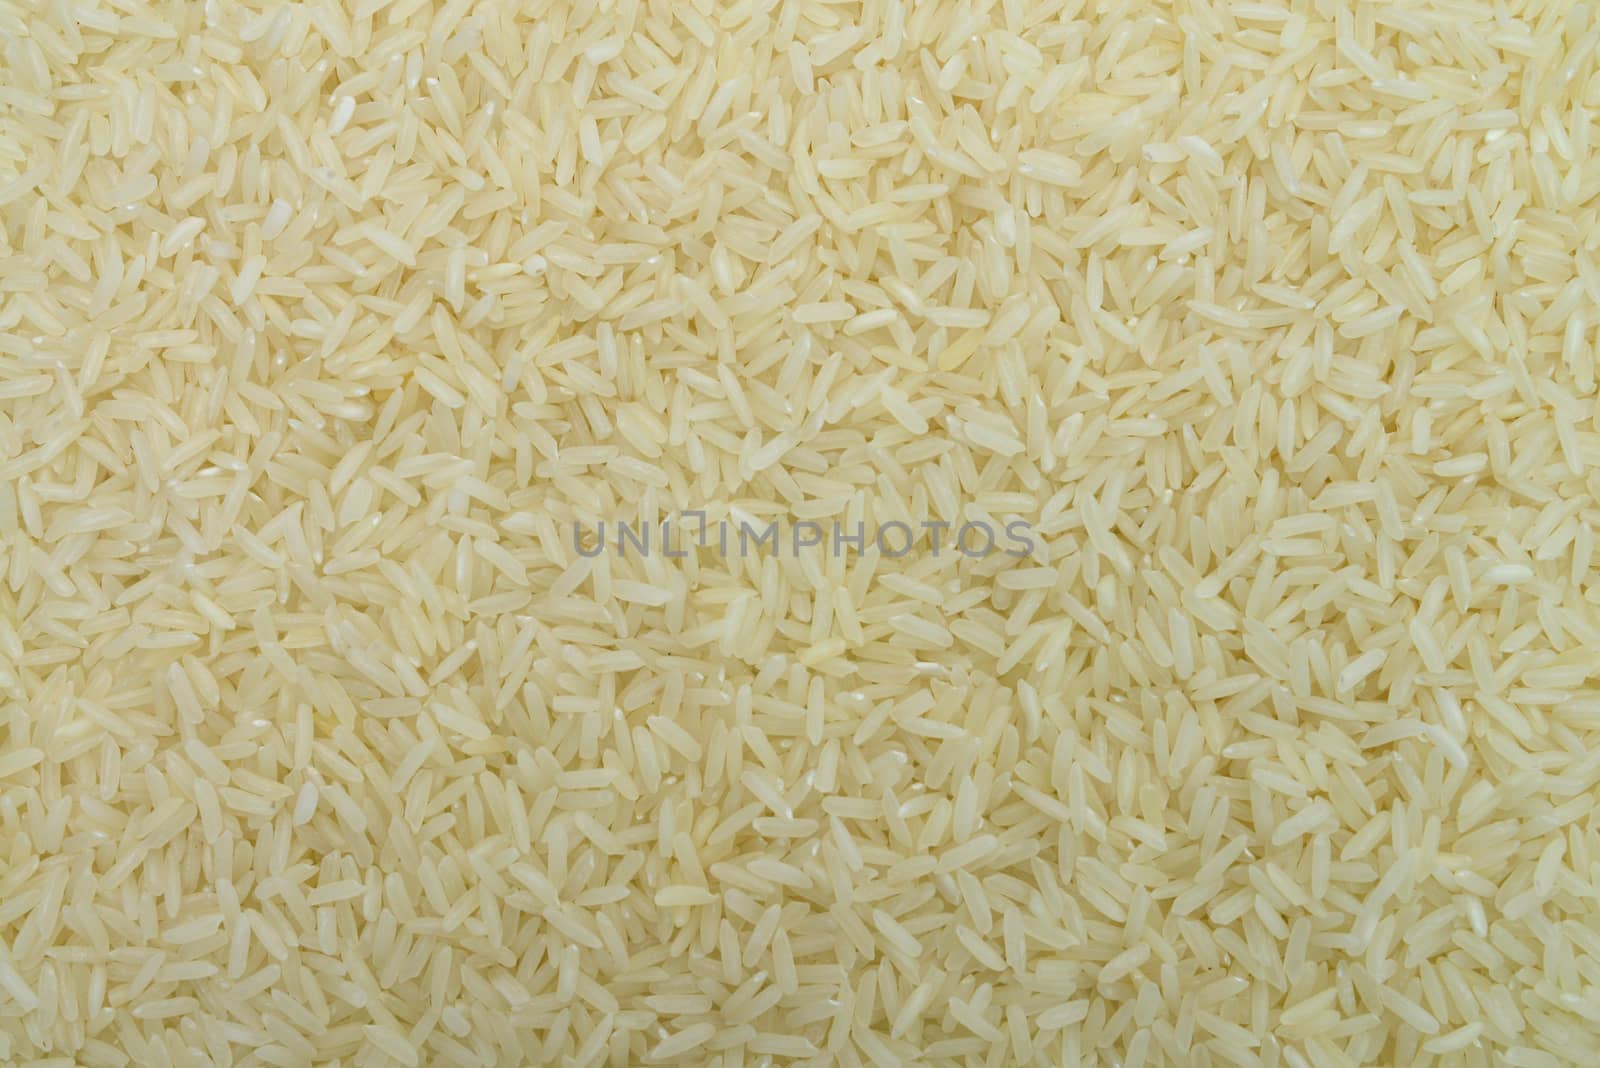 rice grains macro texture close detail pattern